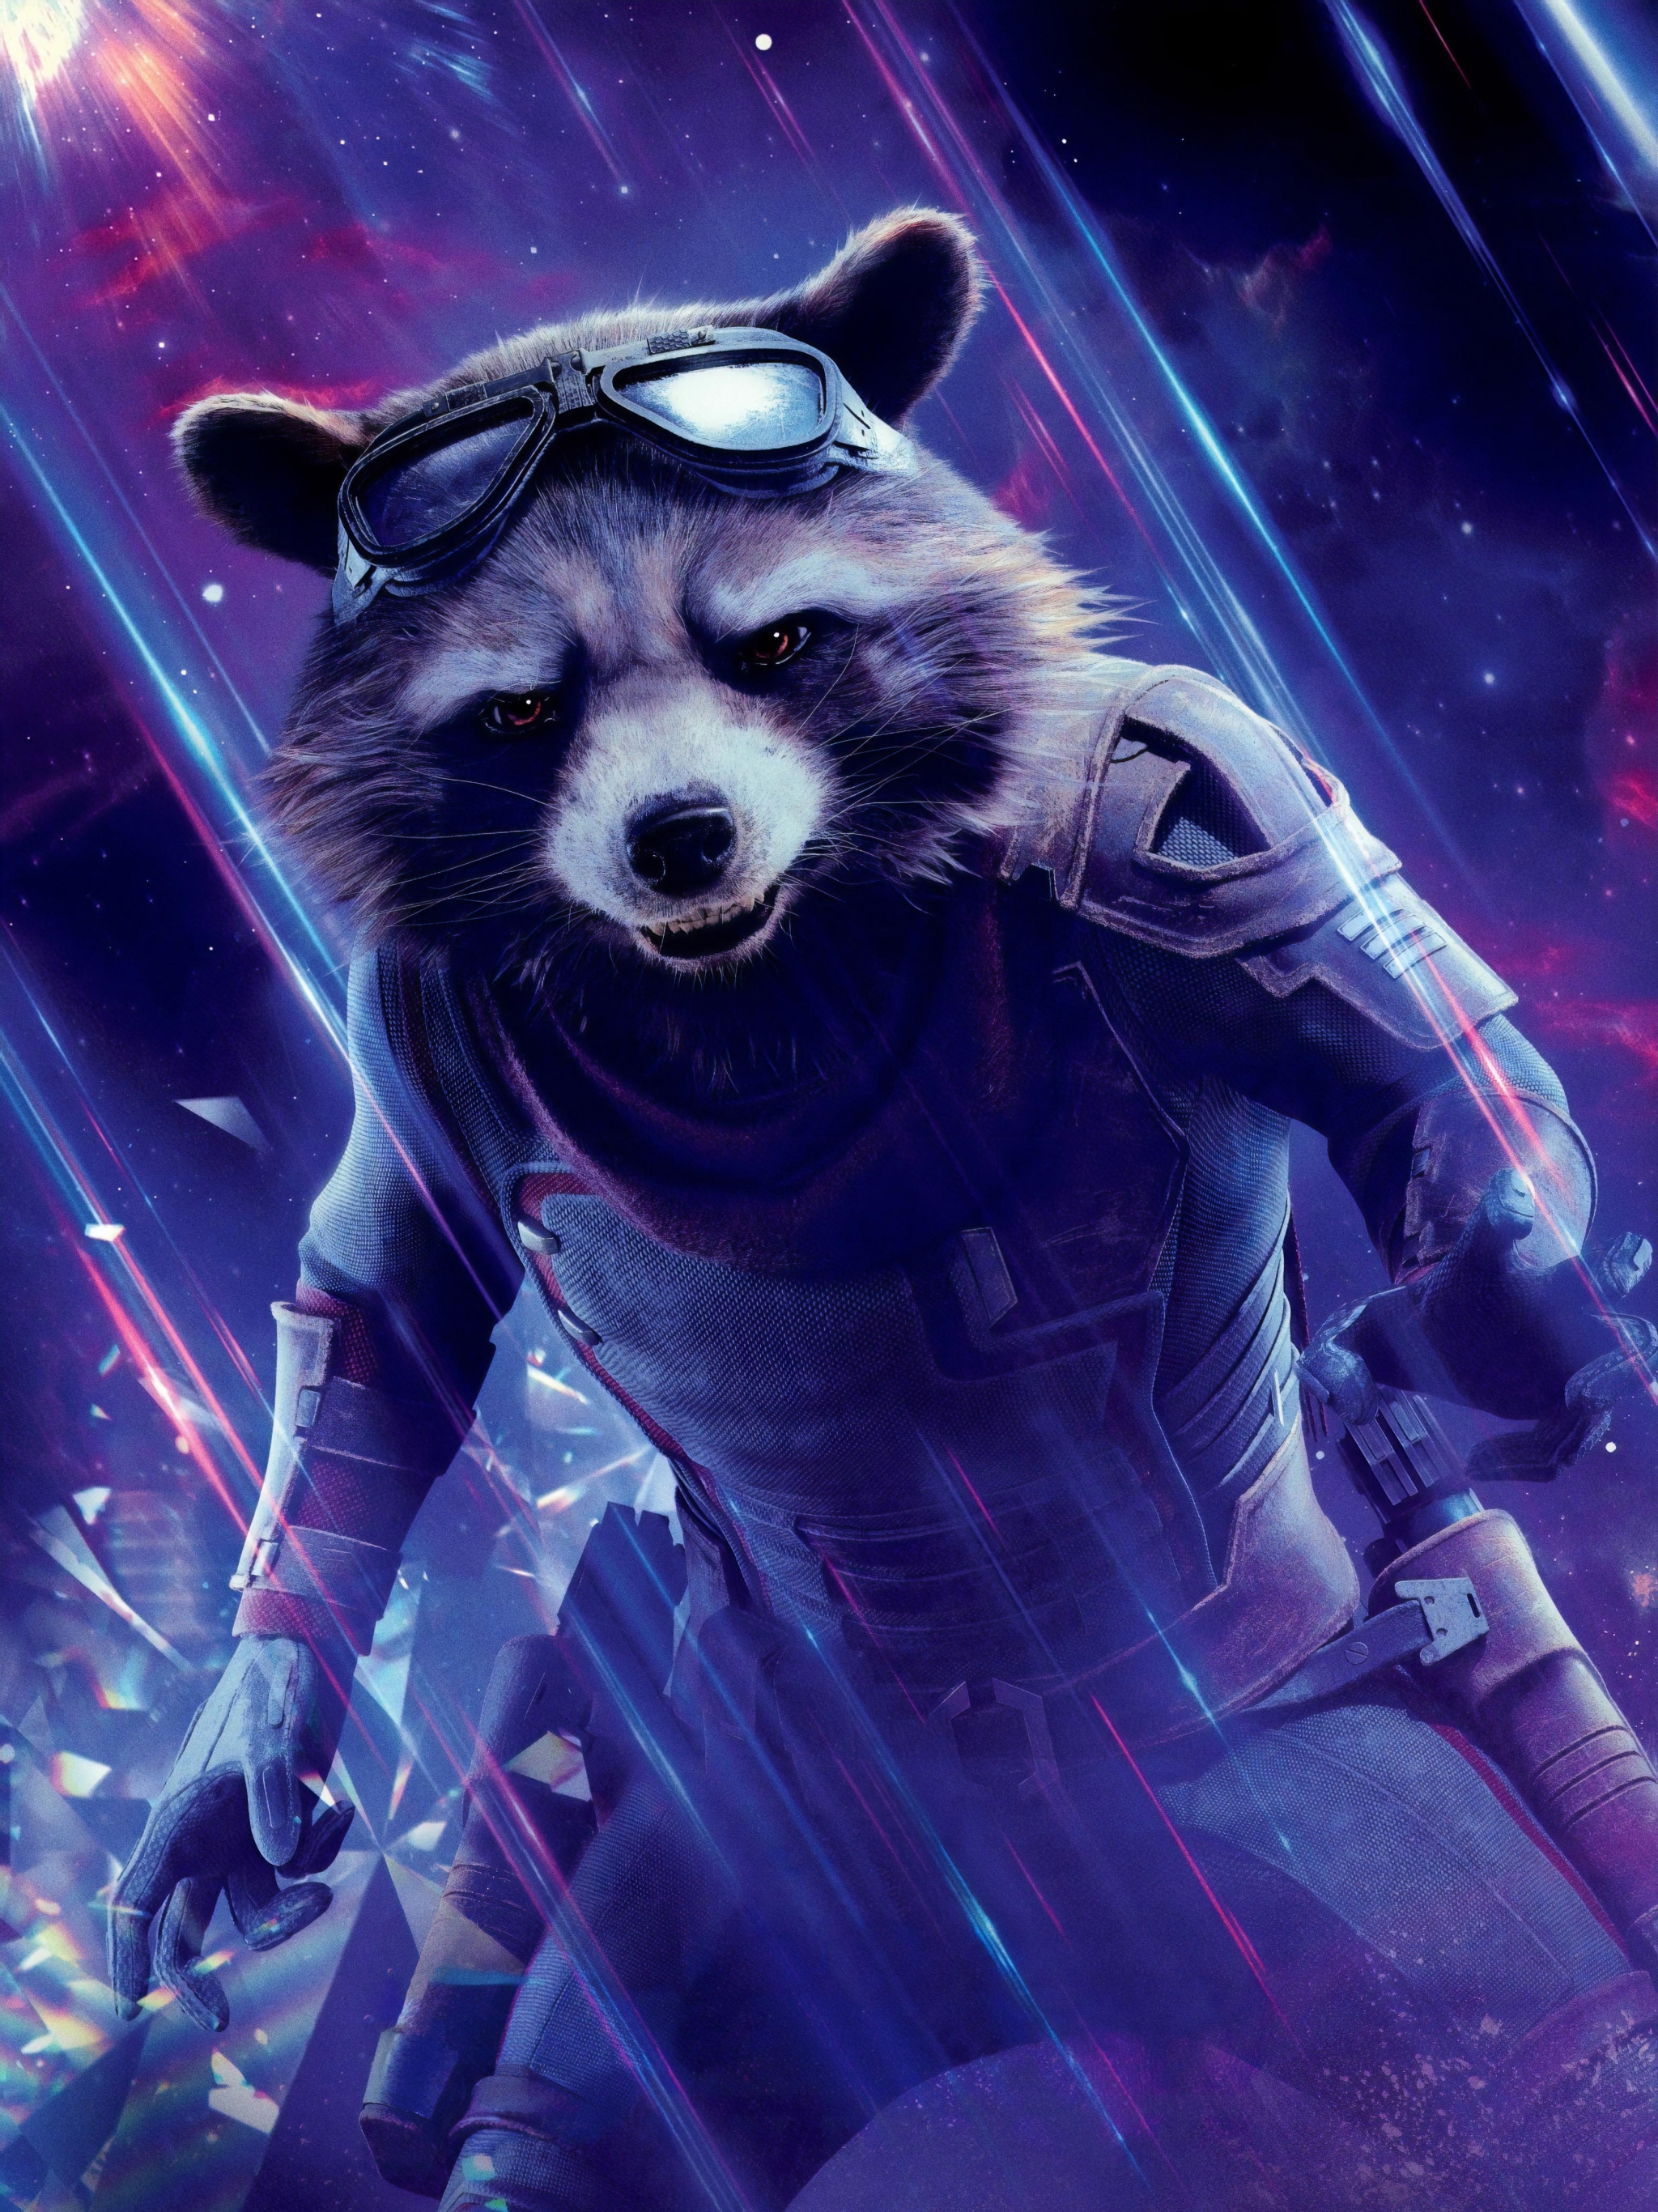 https://images.wallpapersden.com/image/download/rocket-raccoon-in-avengers-endgame_a2lpaGuUmZqaraWkpJRnZWltrWdsaGc.jpg